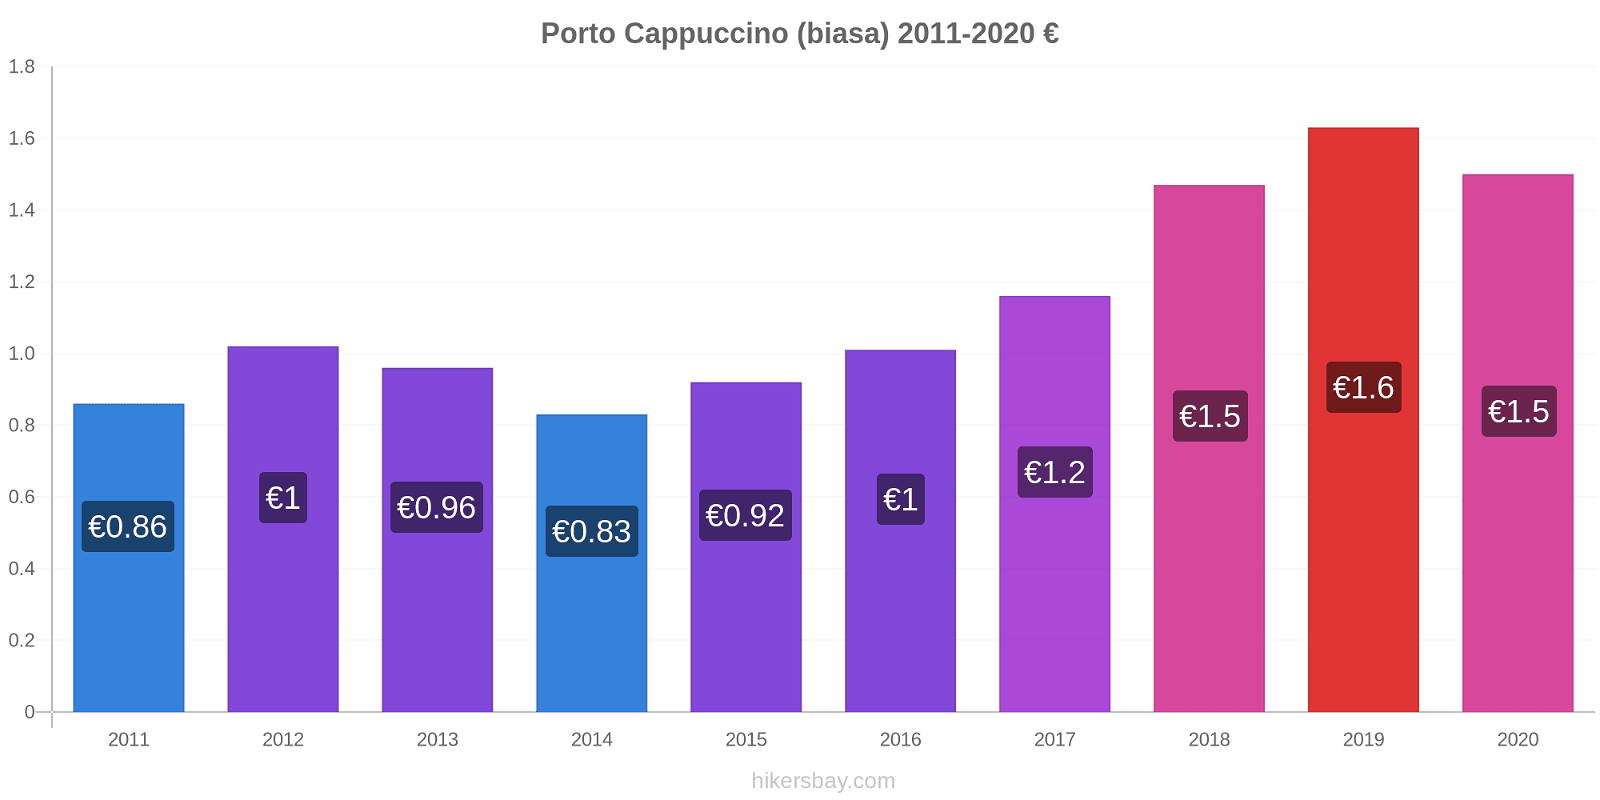 Porto perubahan harga Cappuccino (biasa) hikersbay.com